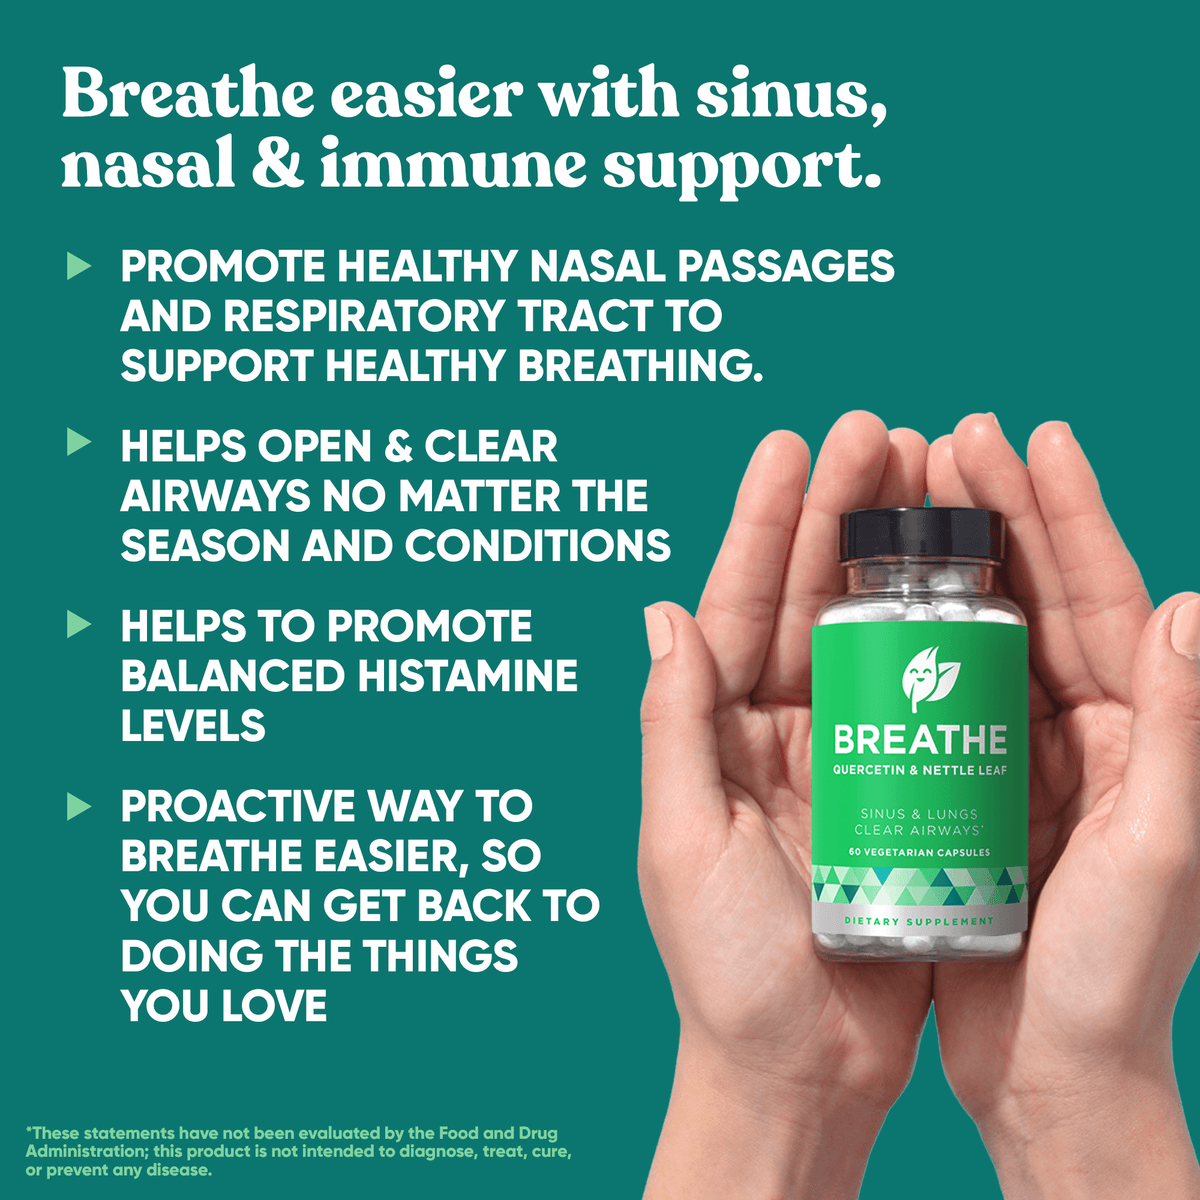 Eu Natural BREATHE Sinus &amp; Lungs Respiratory Health BOGO 50% Off (6 Pack)